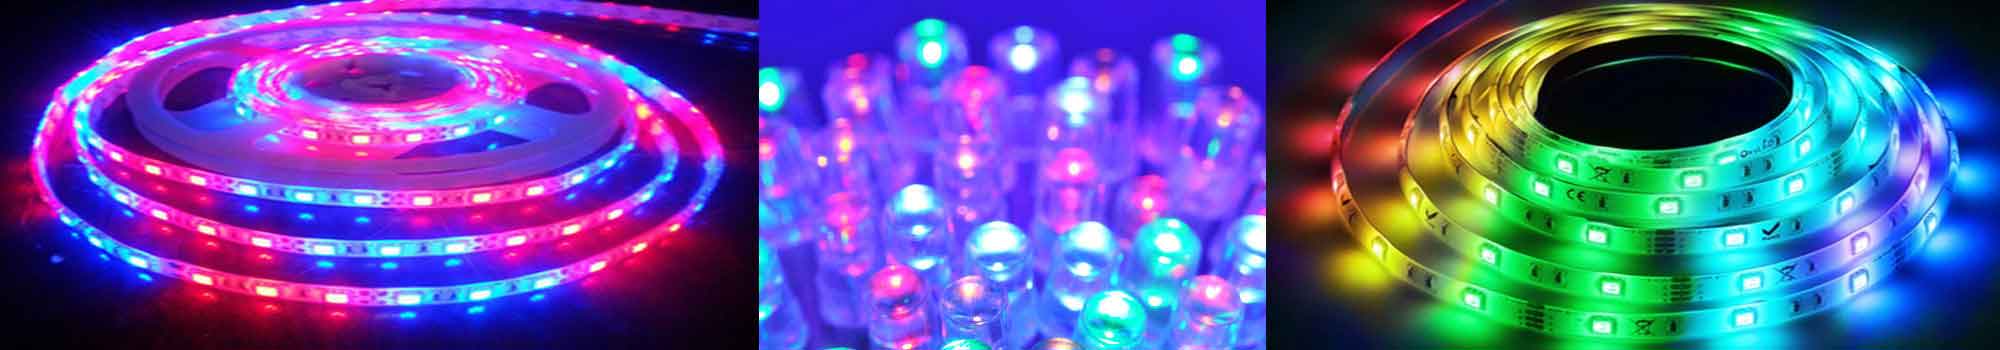 LED Lighting Benefits